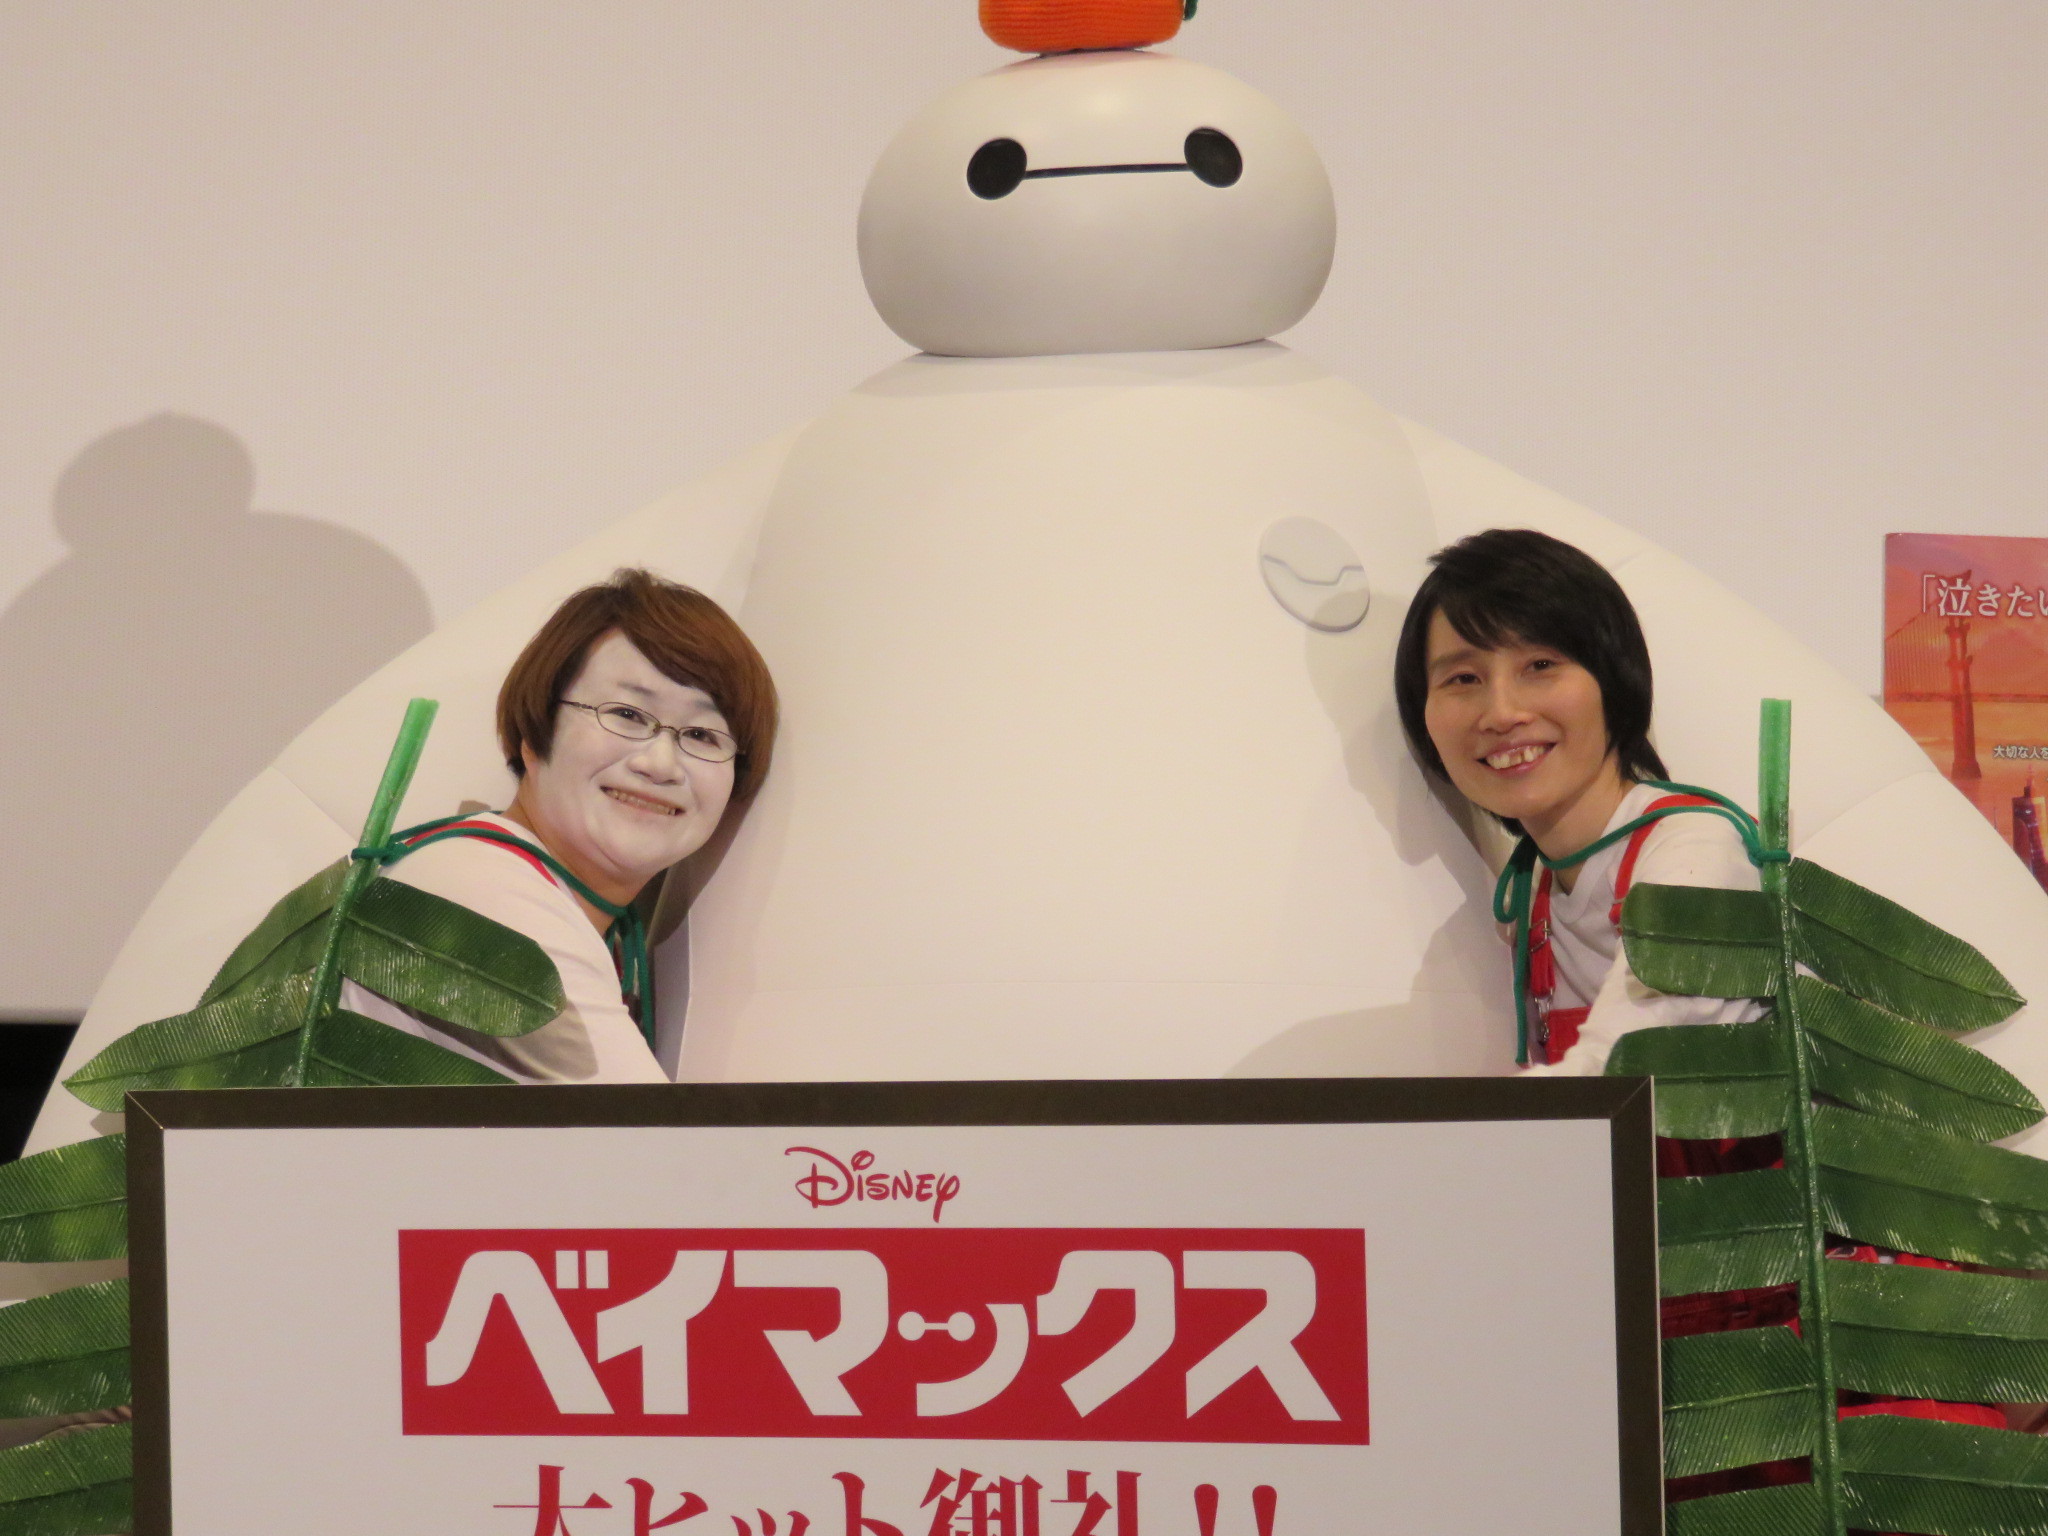 http://news.yoshimoto.co.jp/photos/uncategorized/2014/12/25/20141225234056-c078a0712d649c4d366c73451199b04e462a89d4.jpg